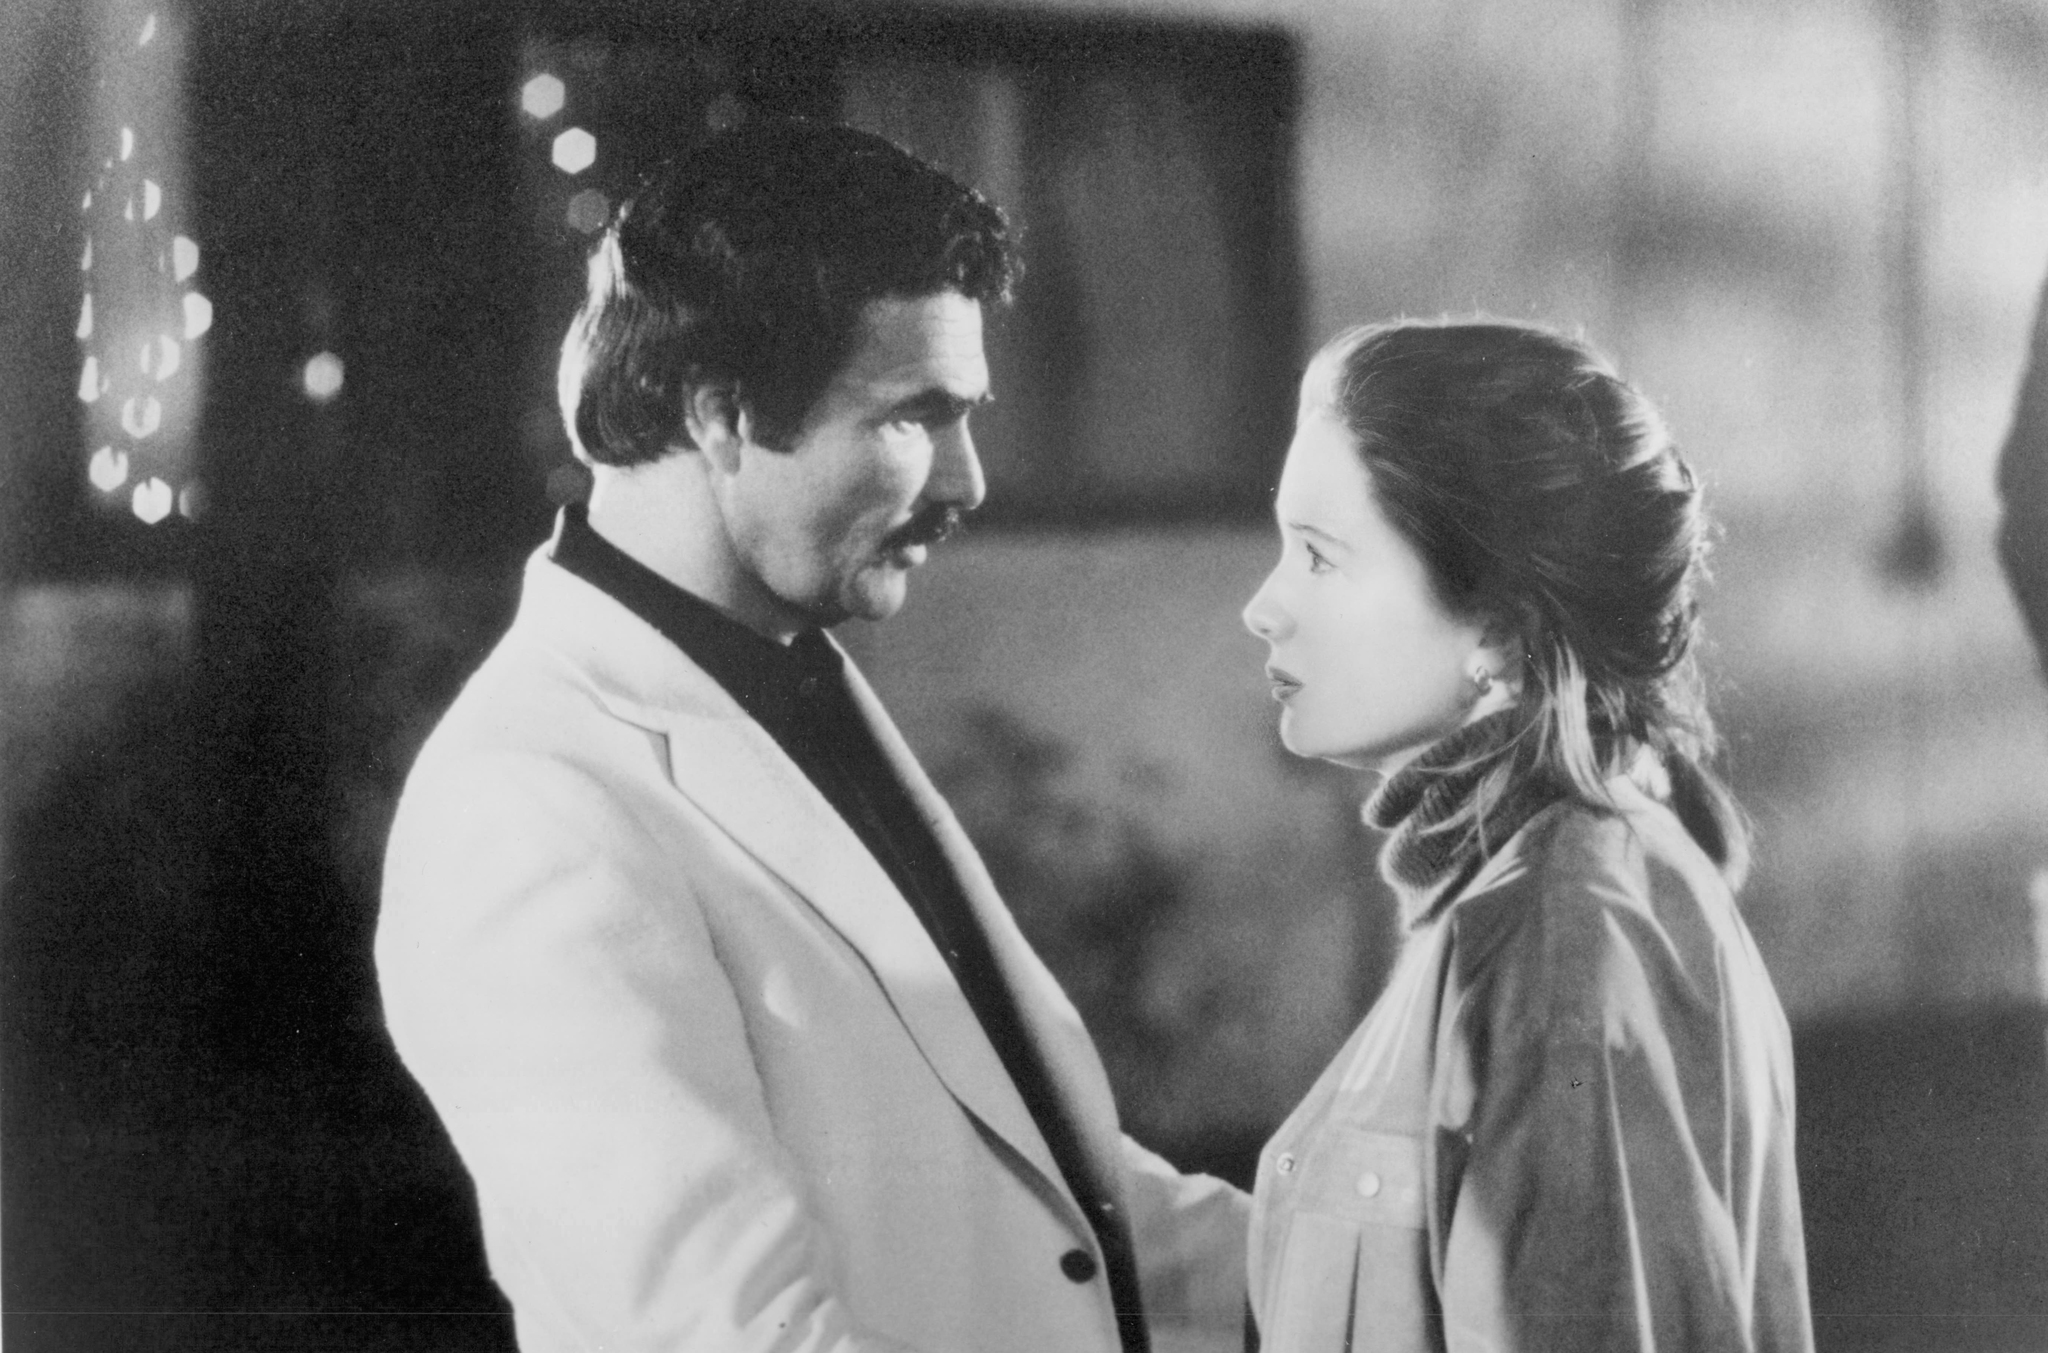 Still of Burt Reynolds and Karen Young in Heat (1986)